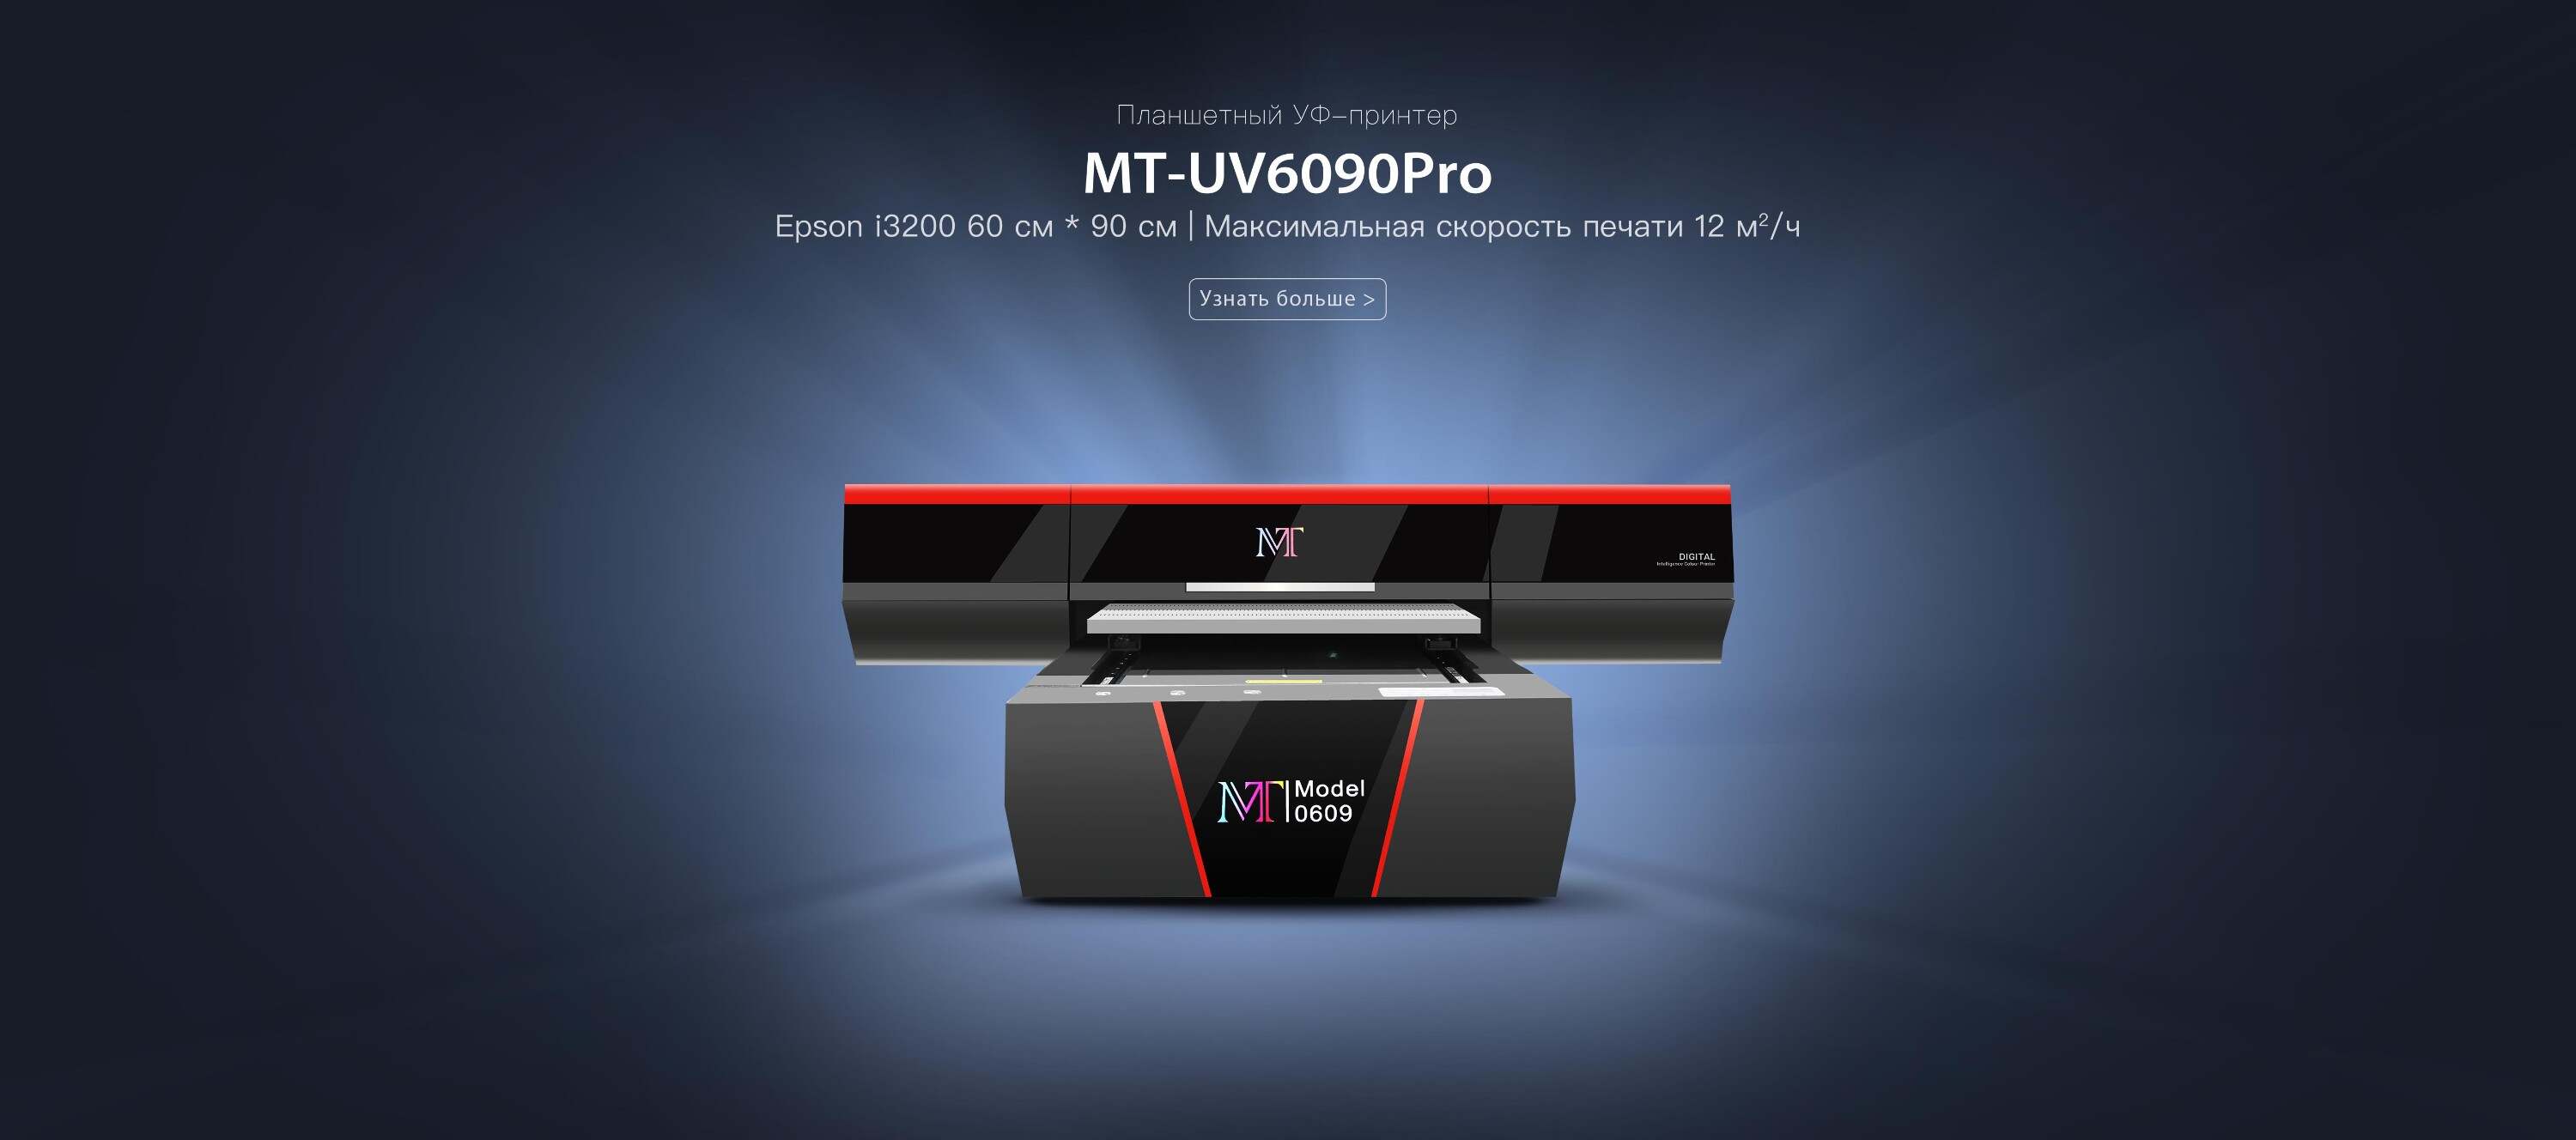 UV6090Pro